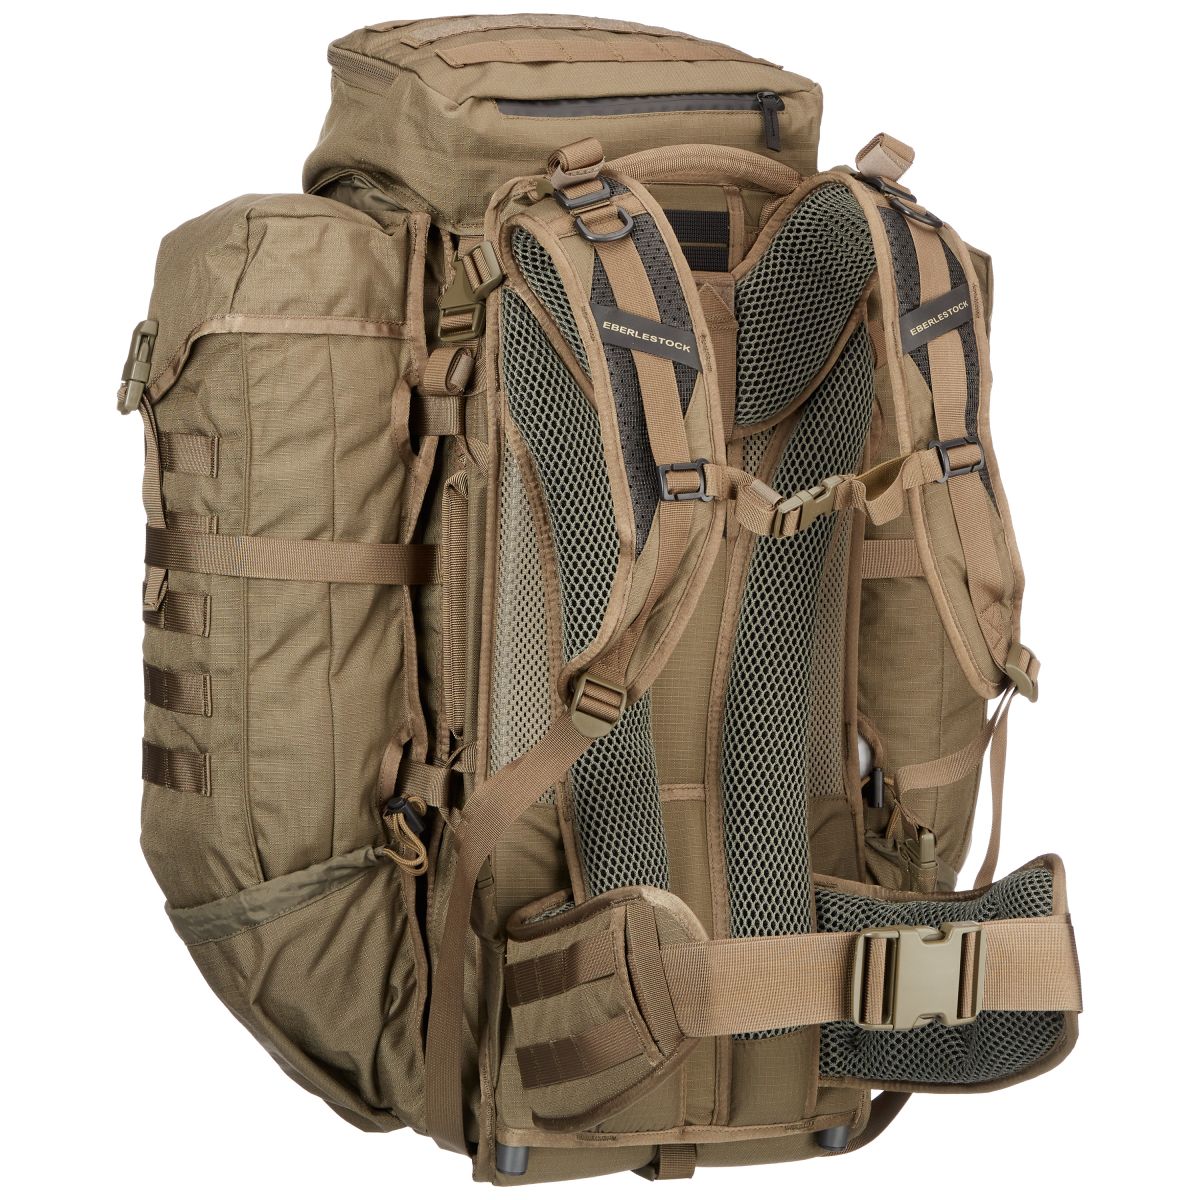 Purchase the Eberlestock Backpack Operator Pack-2 INTEX military